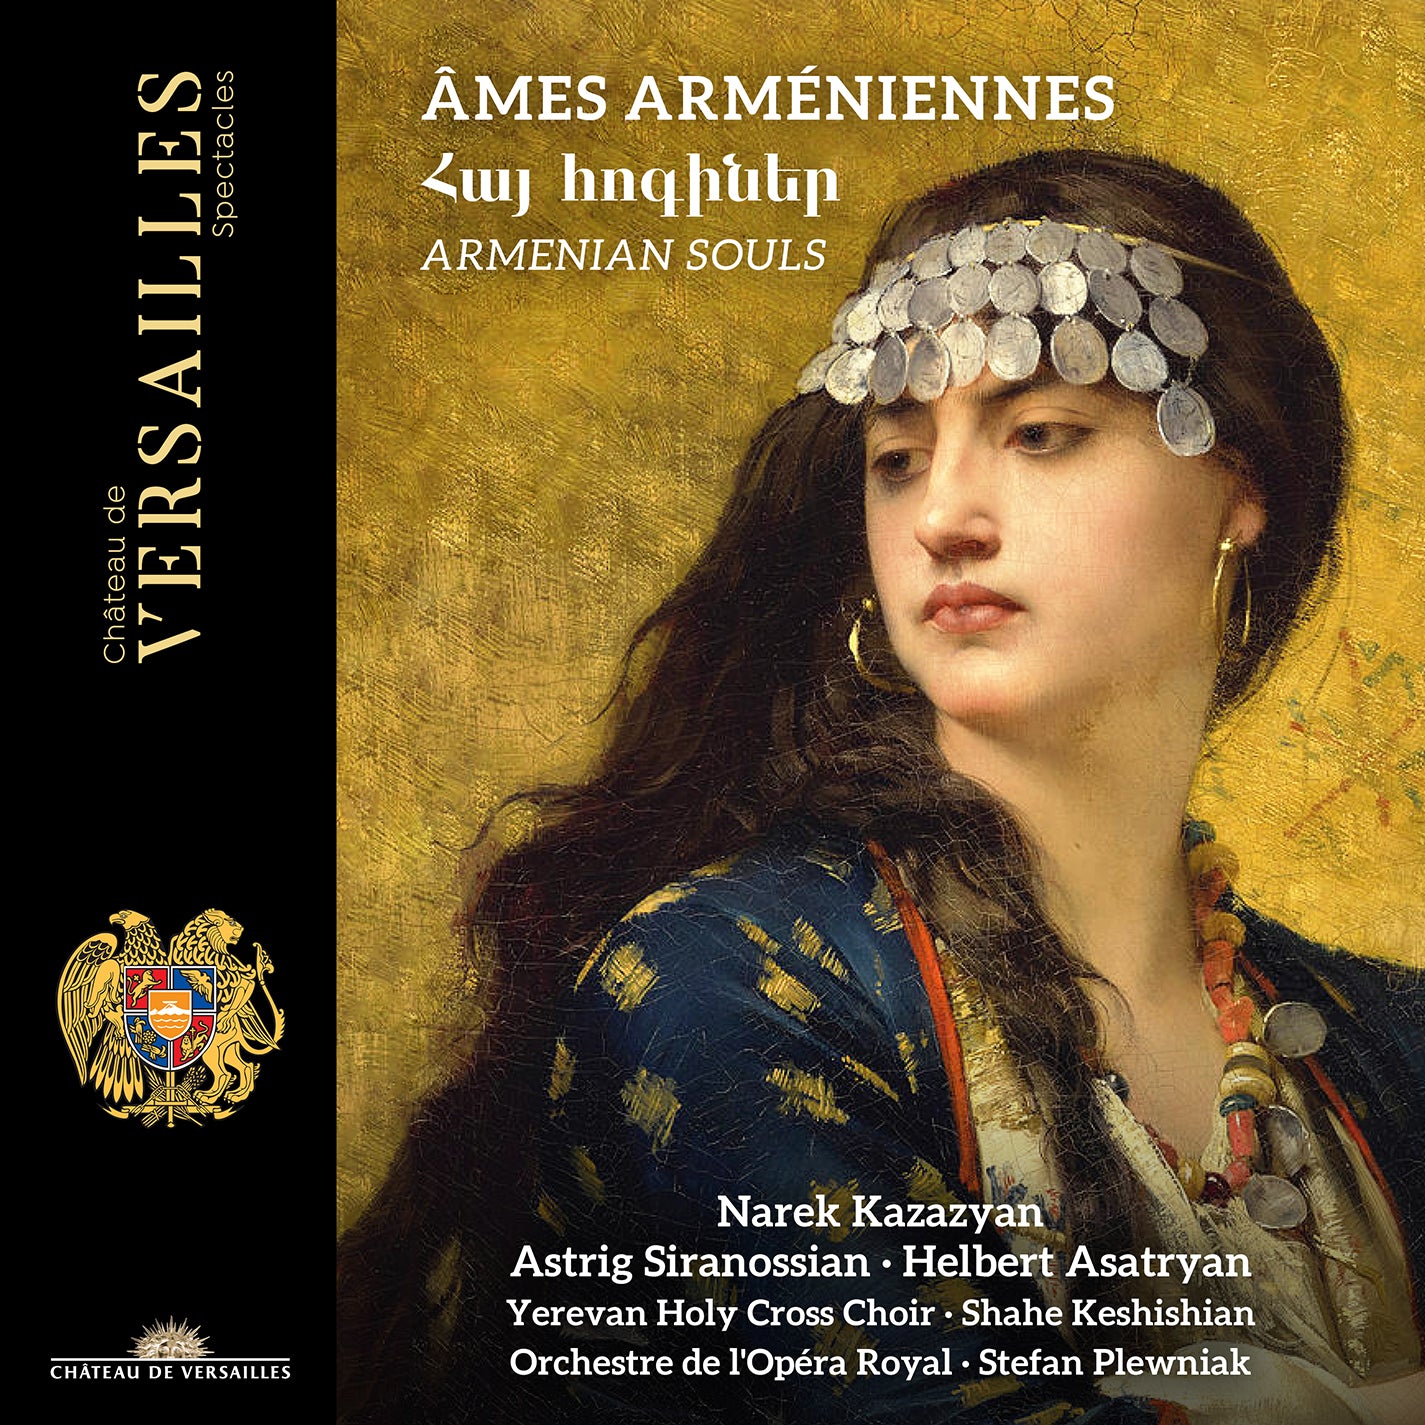 Armenian Souls / Kazazyan, Siranossian, Asatryan, Keshishian, Royal Opera Orchestra